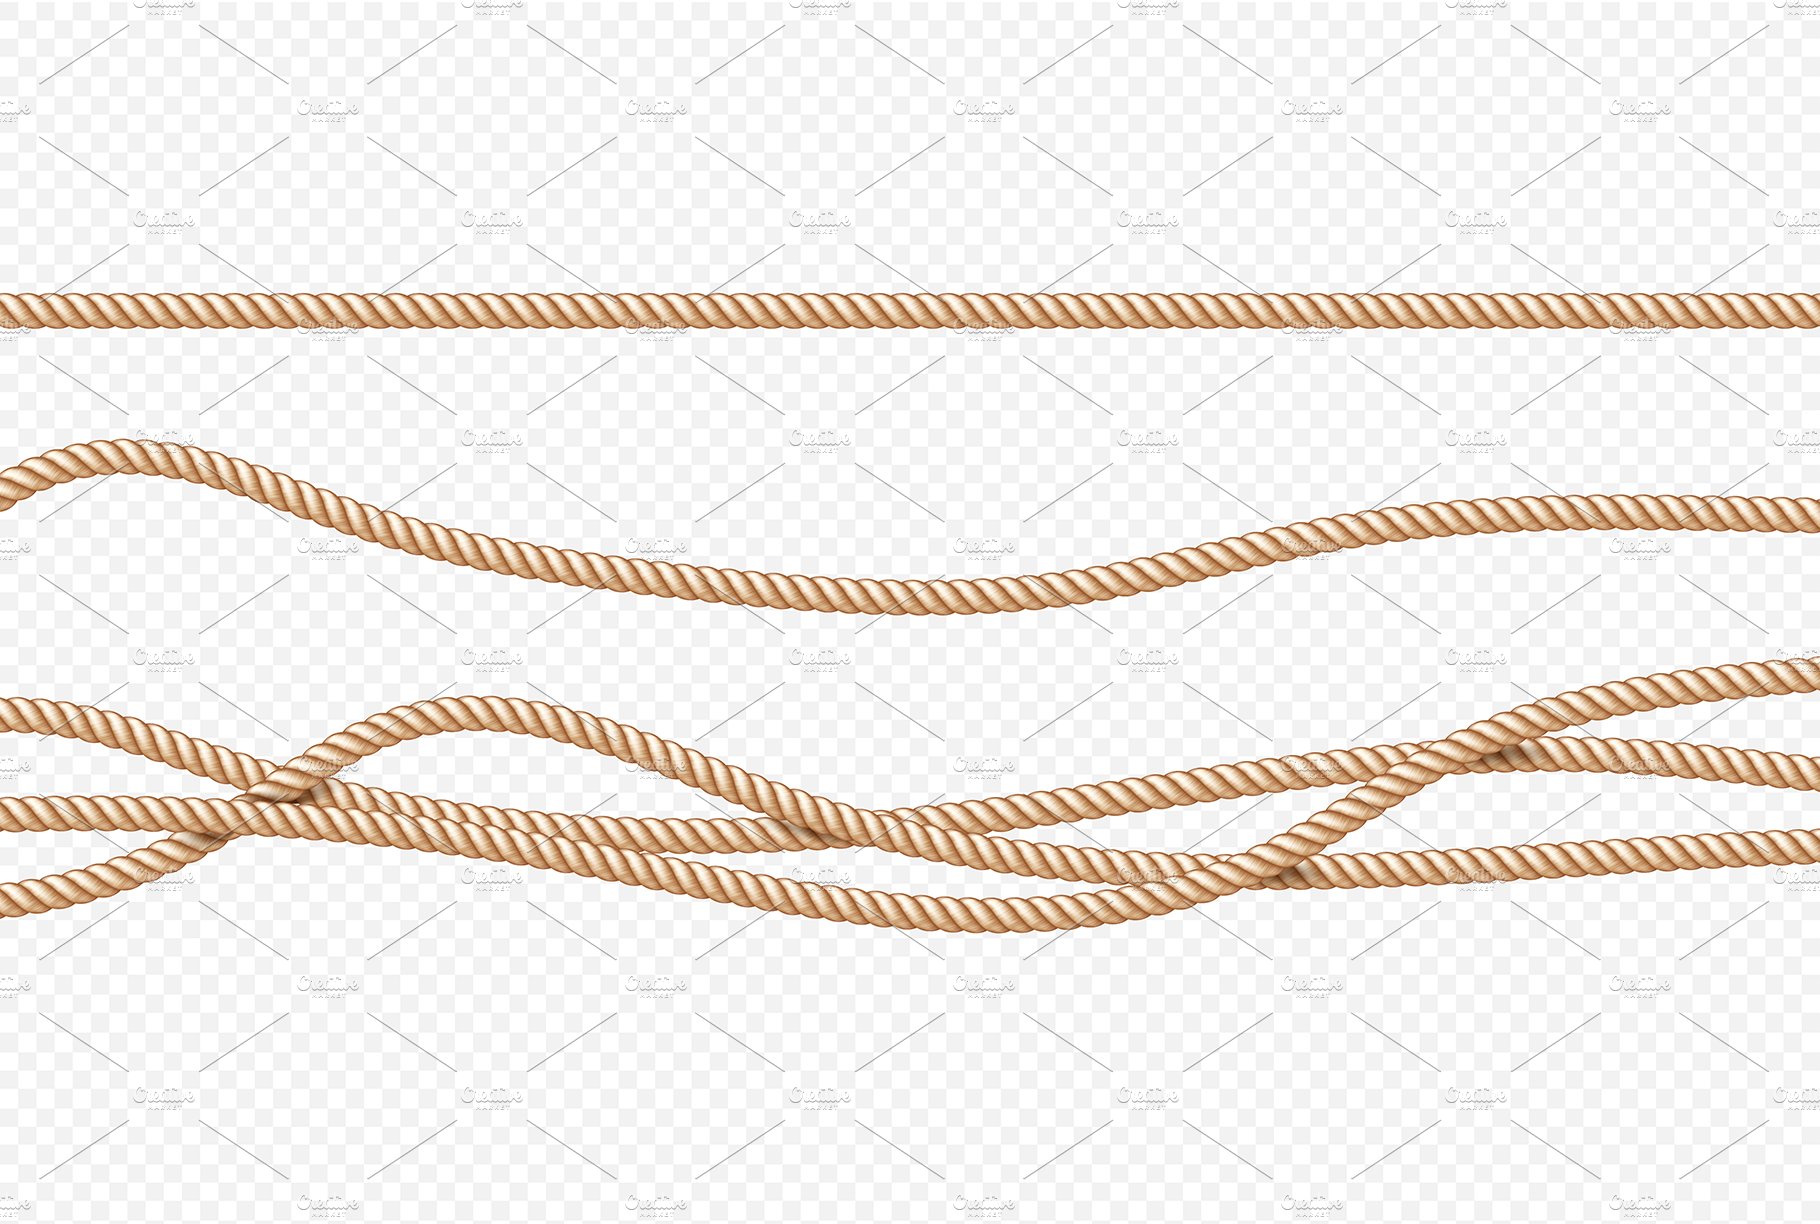 Realistic vector fiber ropes set preview image.